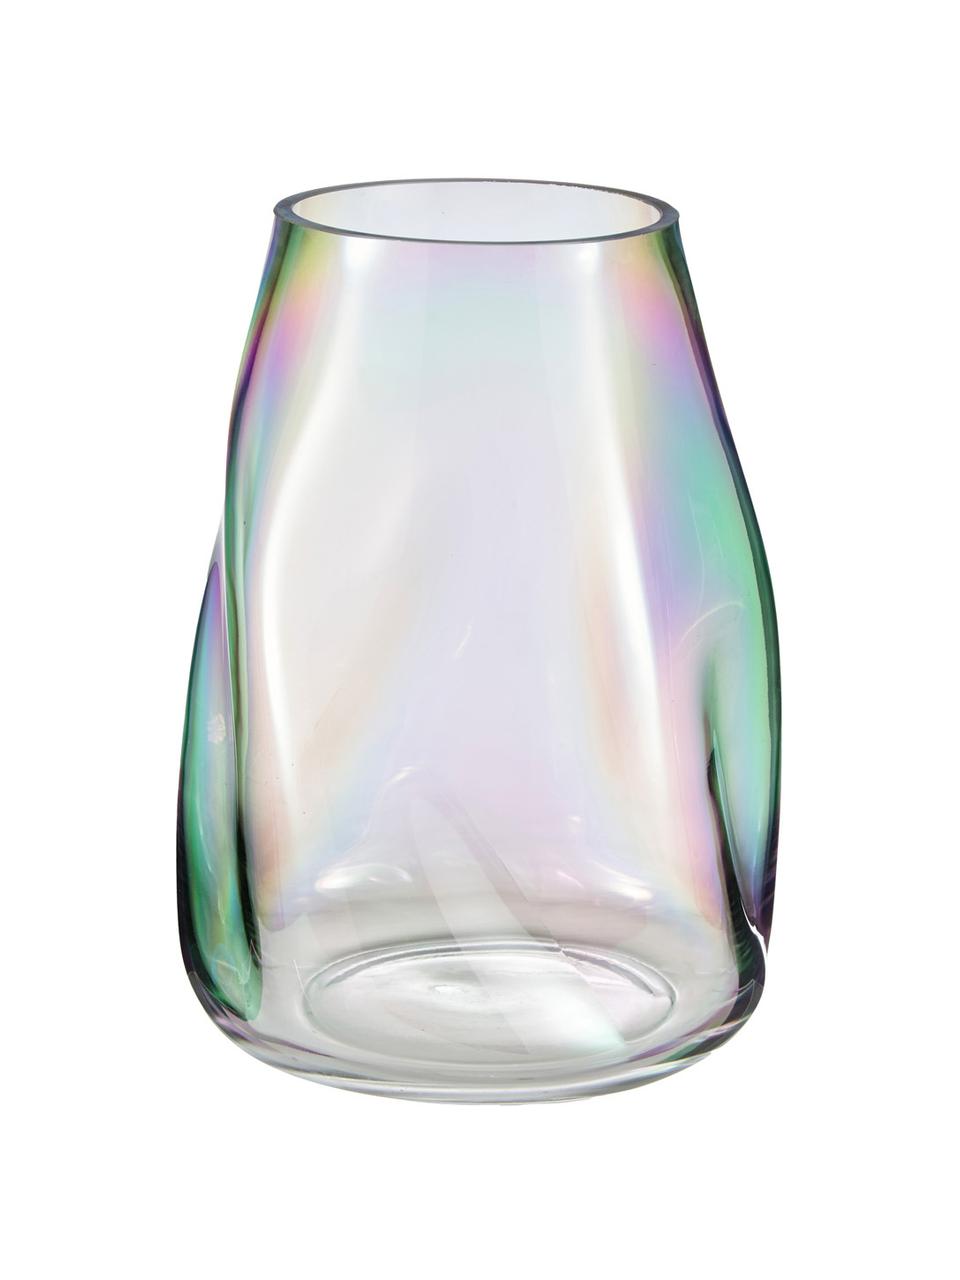 Vaso in vetro soffiato iridescente Rainbow, Vetro soffiato, Trasparente, iridescente, Ø 18 x Alt. 26 cm